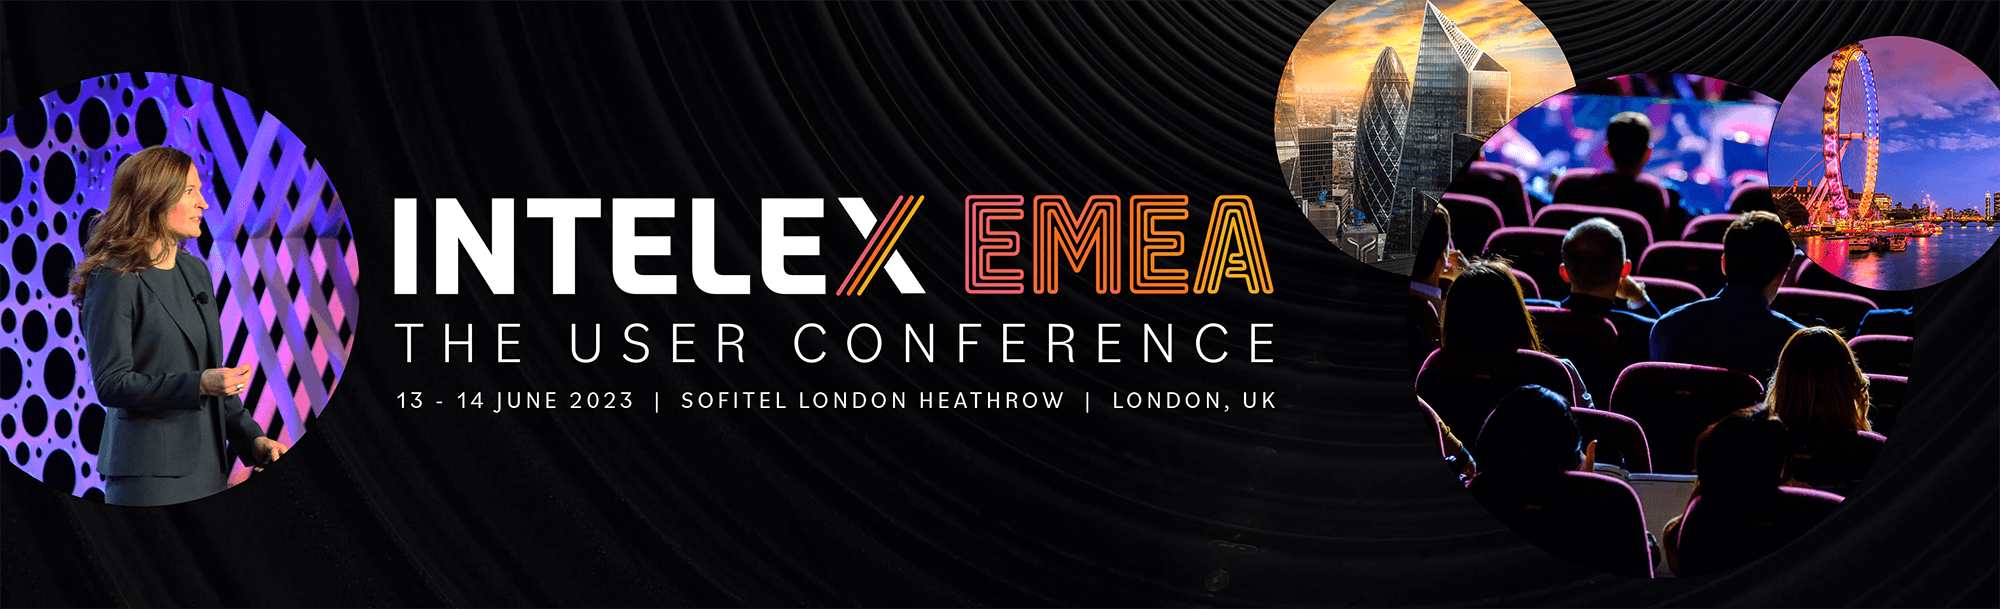 Intelex EMEA User Conference